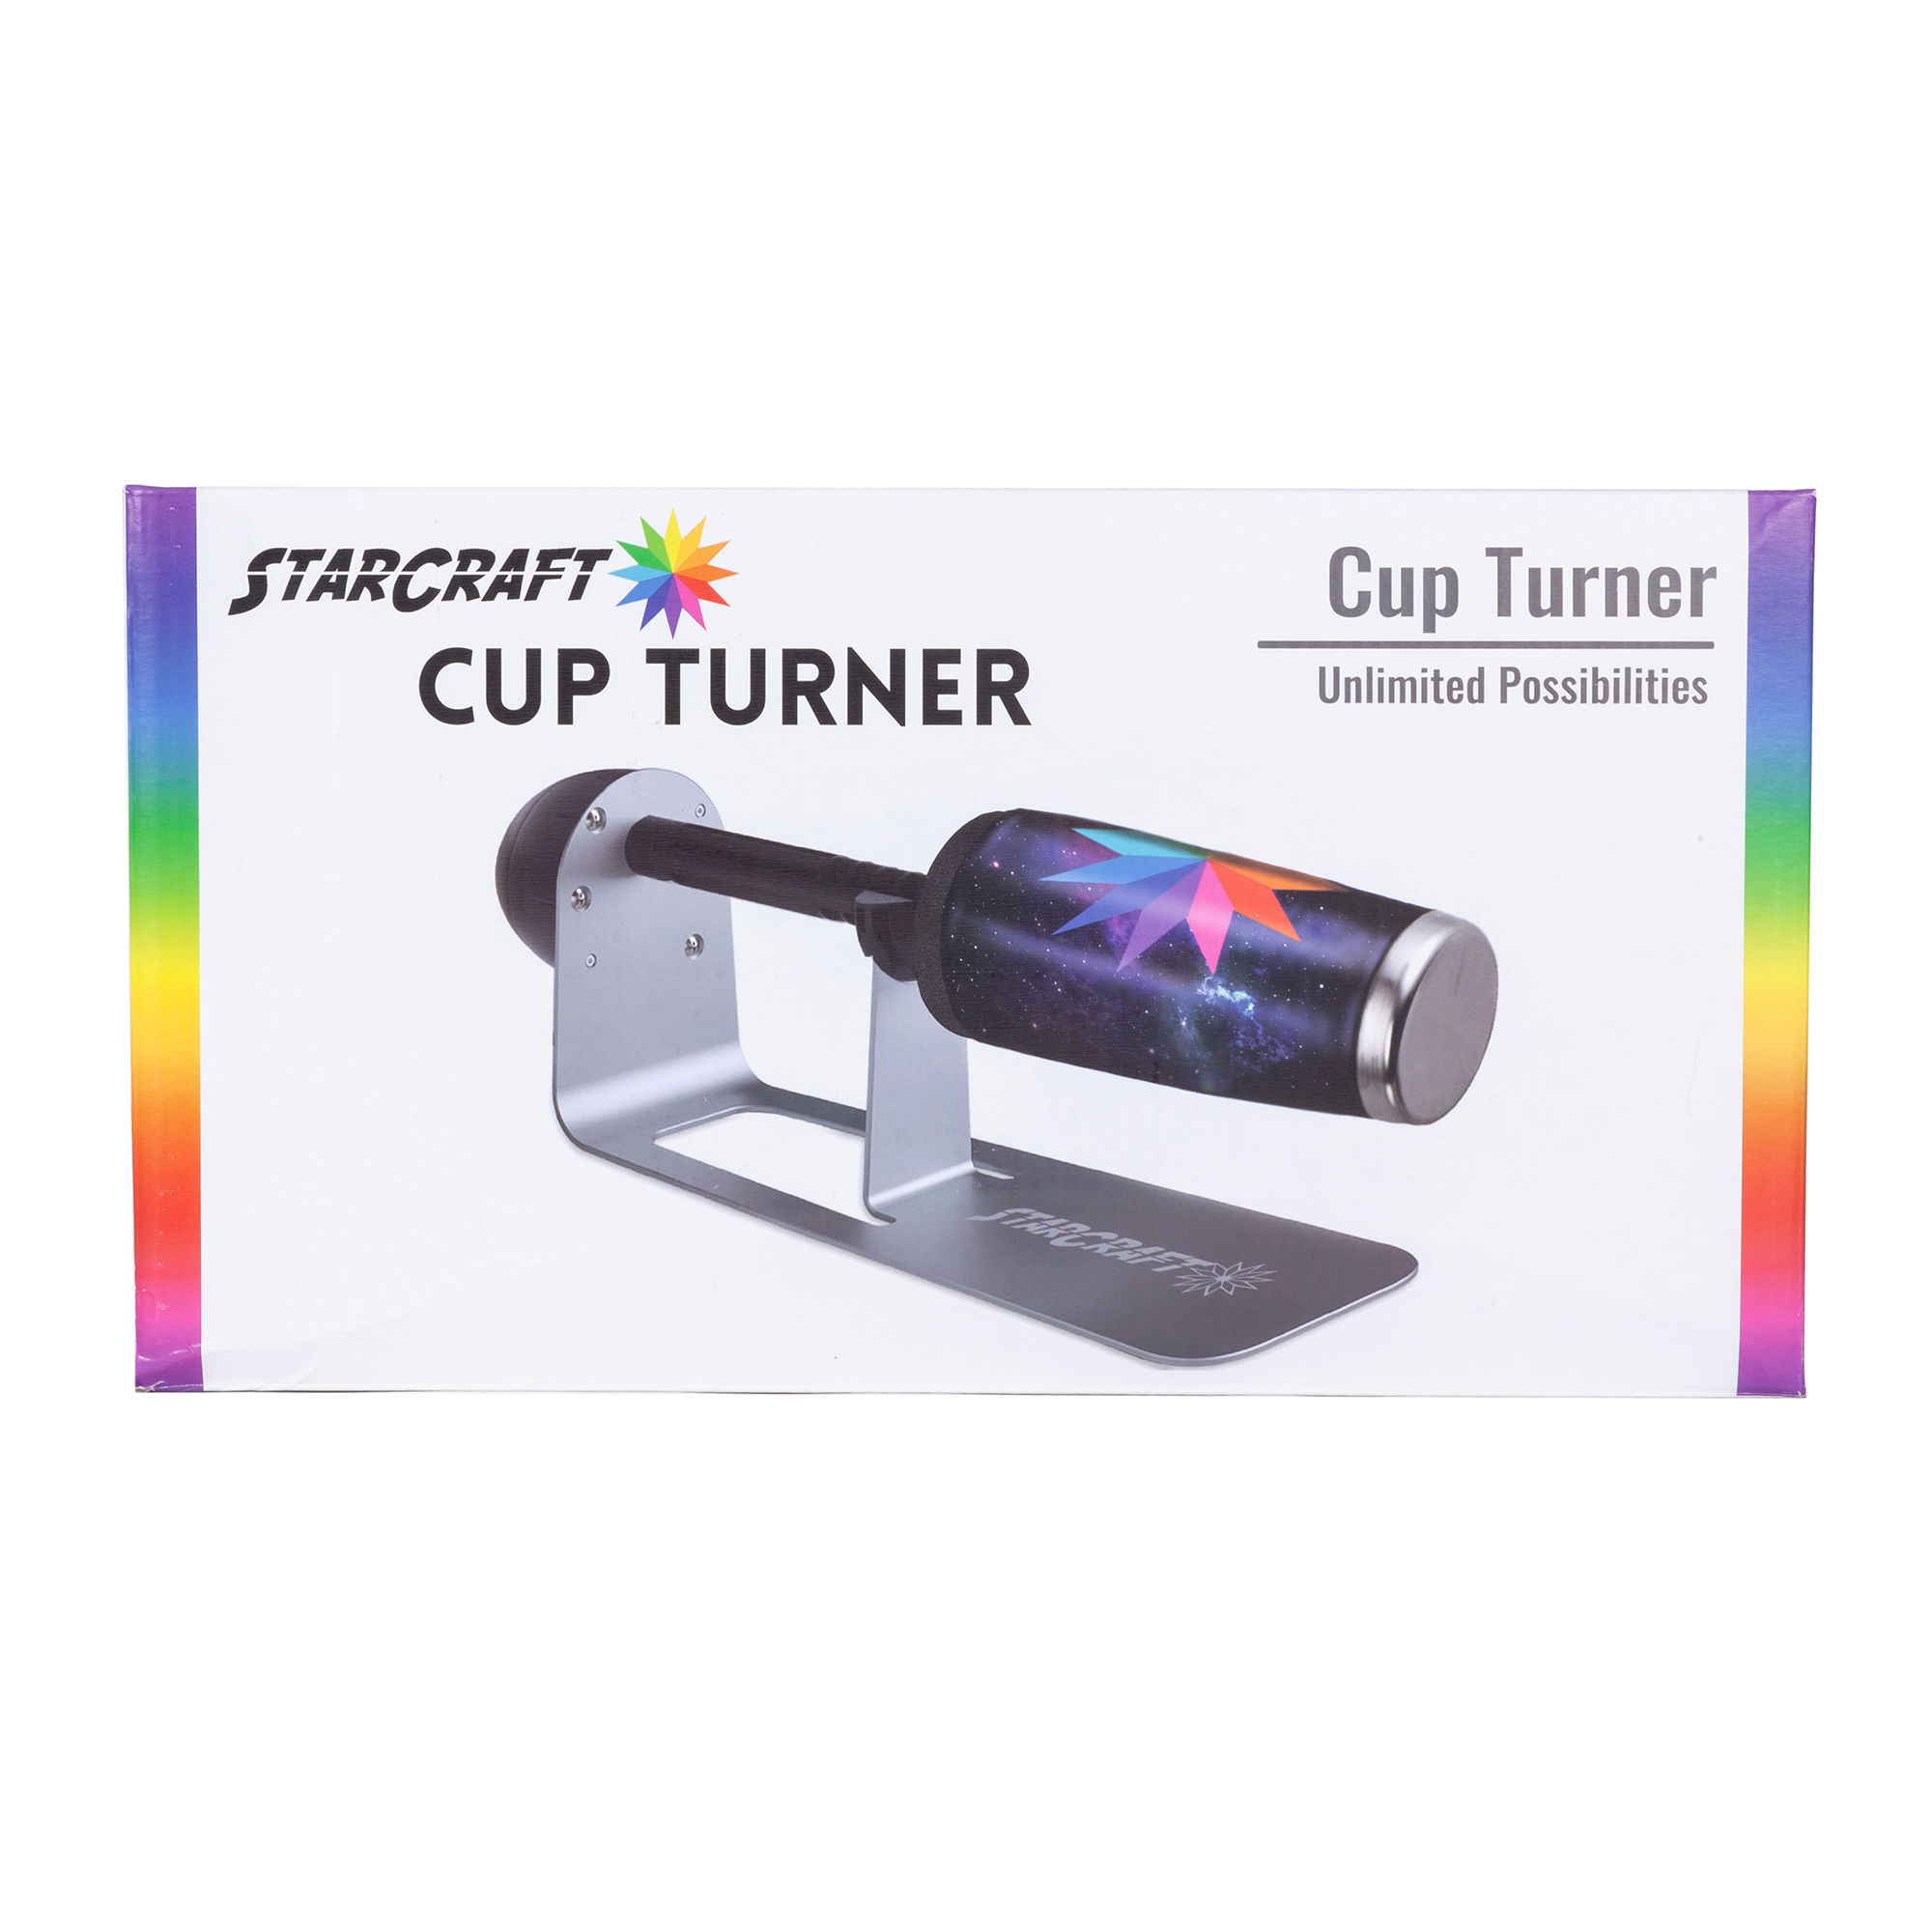 Starcraft Cup Turner